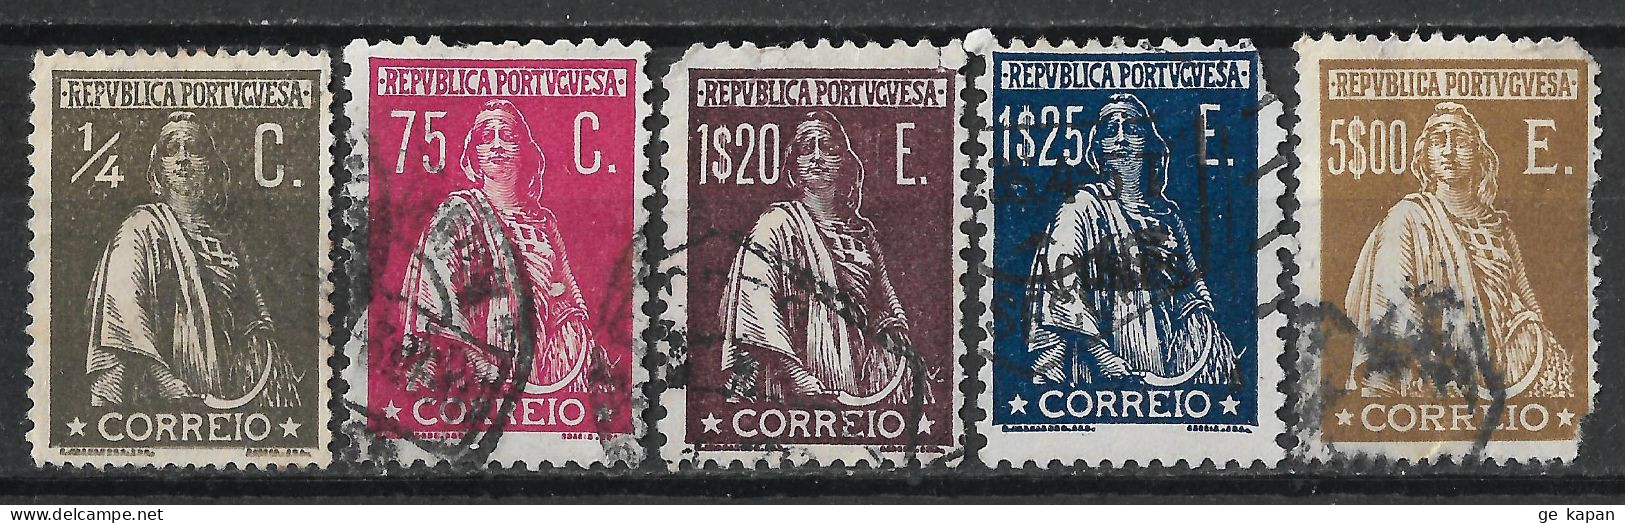 1912-1930 PORTUGAL SET OF 5 USED STAMPS (Michel # 204Ax,428,524,527,528) CV €8.30 - Oblitérés